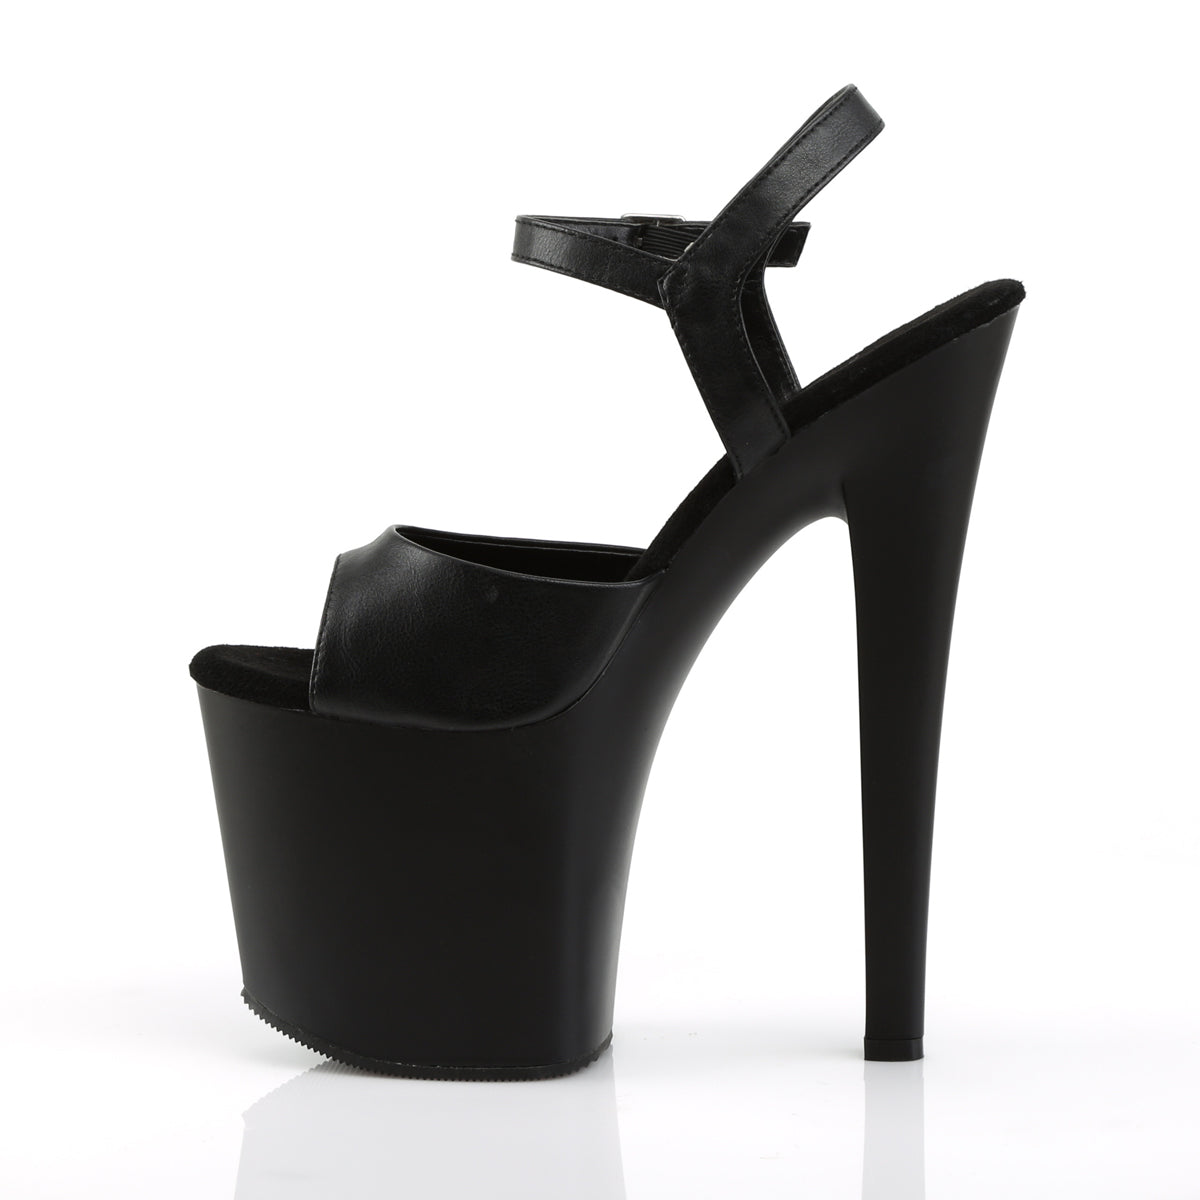 TABOO-709 Pleaser 7.5 Inch Heel Black Pole Dancing Platform-Pleaser- Sexy Shoes Pole Dance Heels